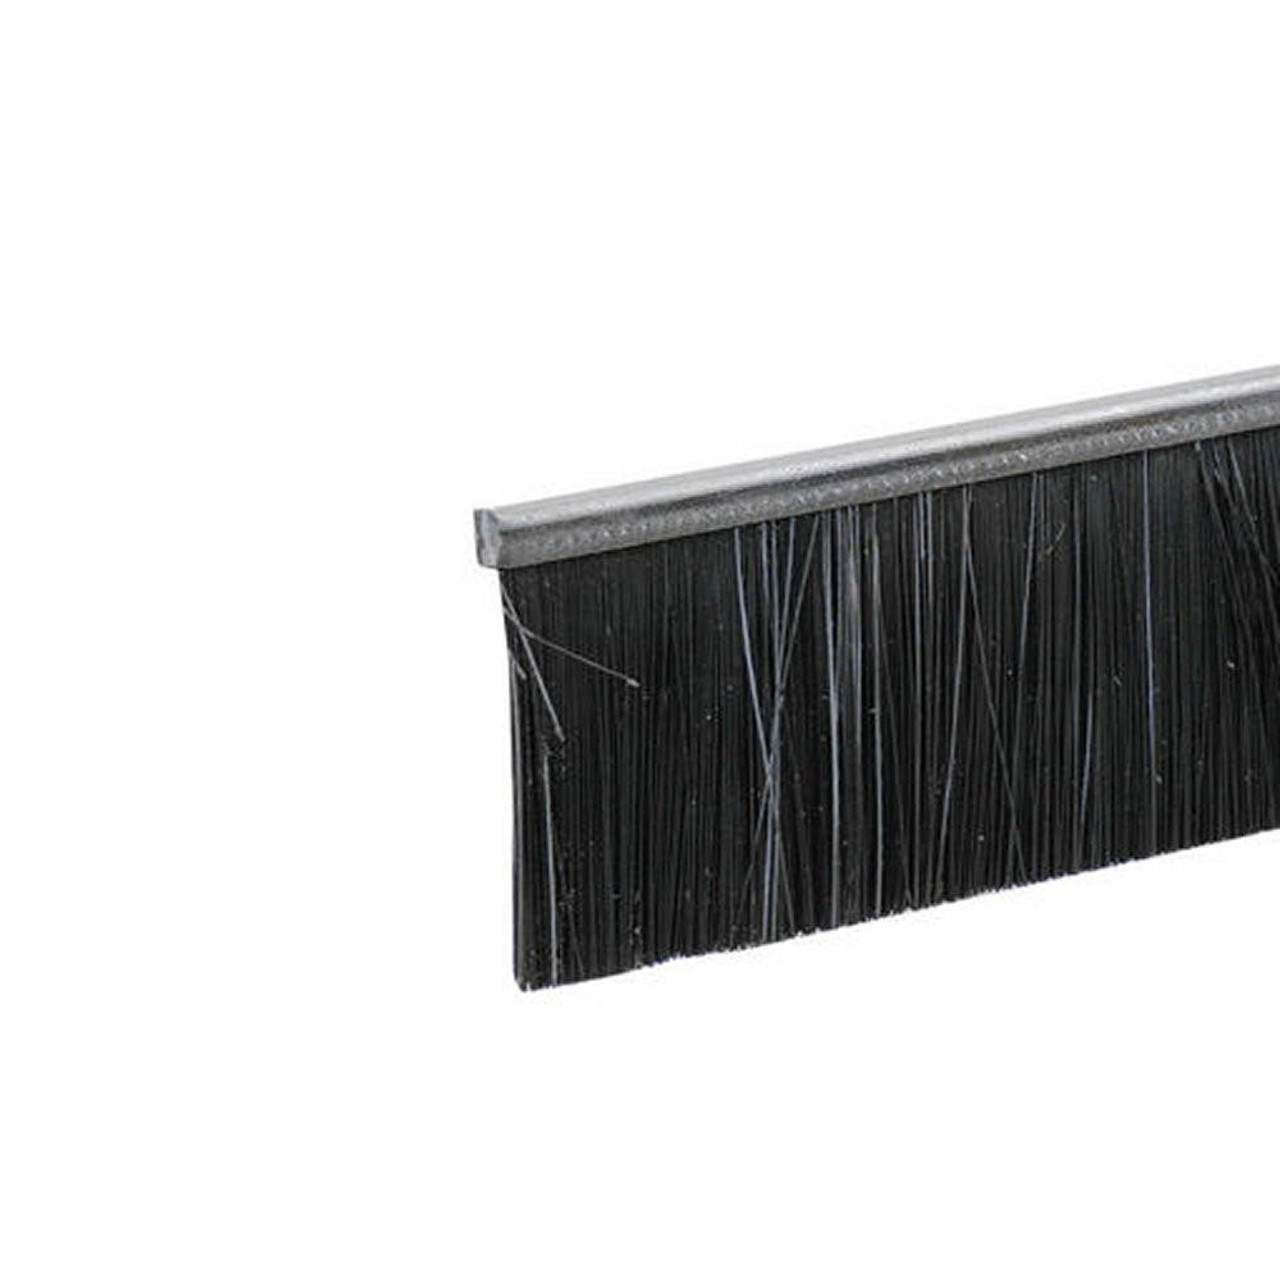 Slim Line Garage Door Brush Seals 1/2-2 inch Bristles - 4 ft Lengths